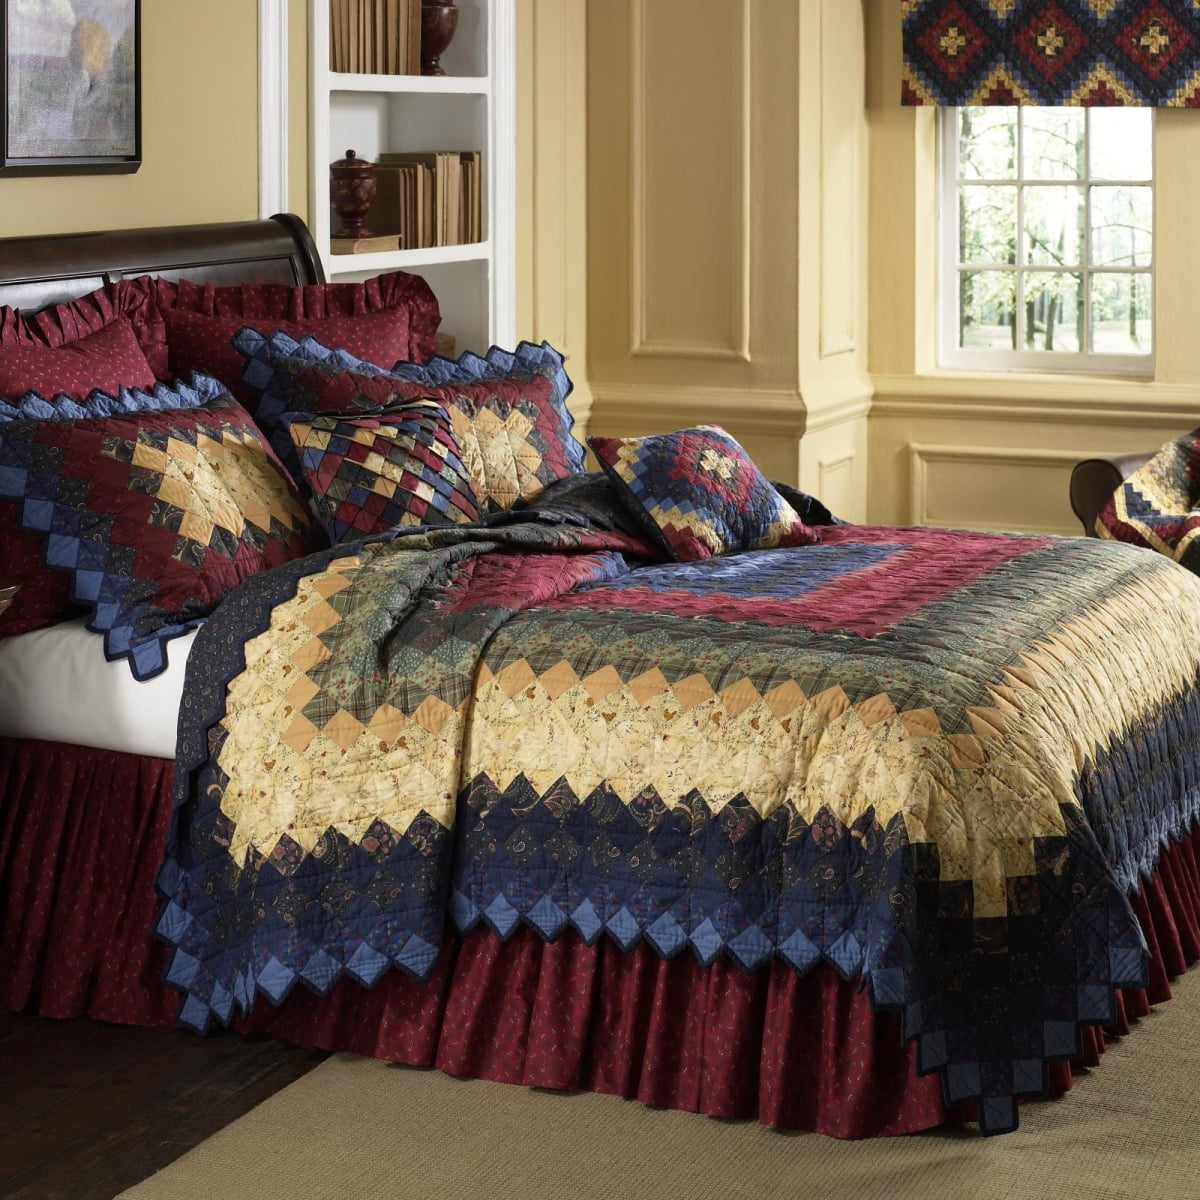 Z72507 105 X 105 In. Chesapeake Trip 3 Piece Cotton Quilt Set, Multi Color - King Size